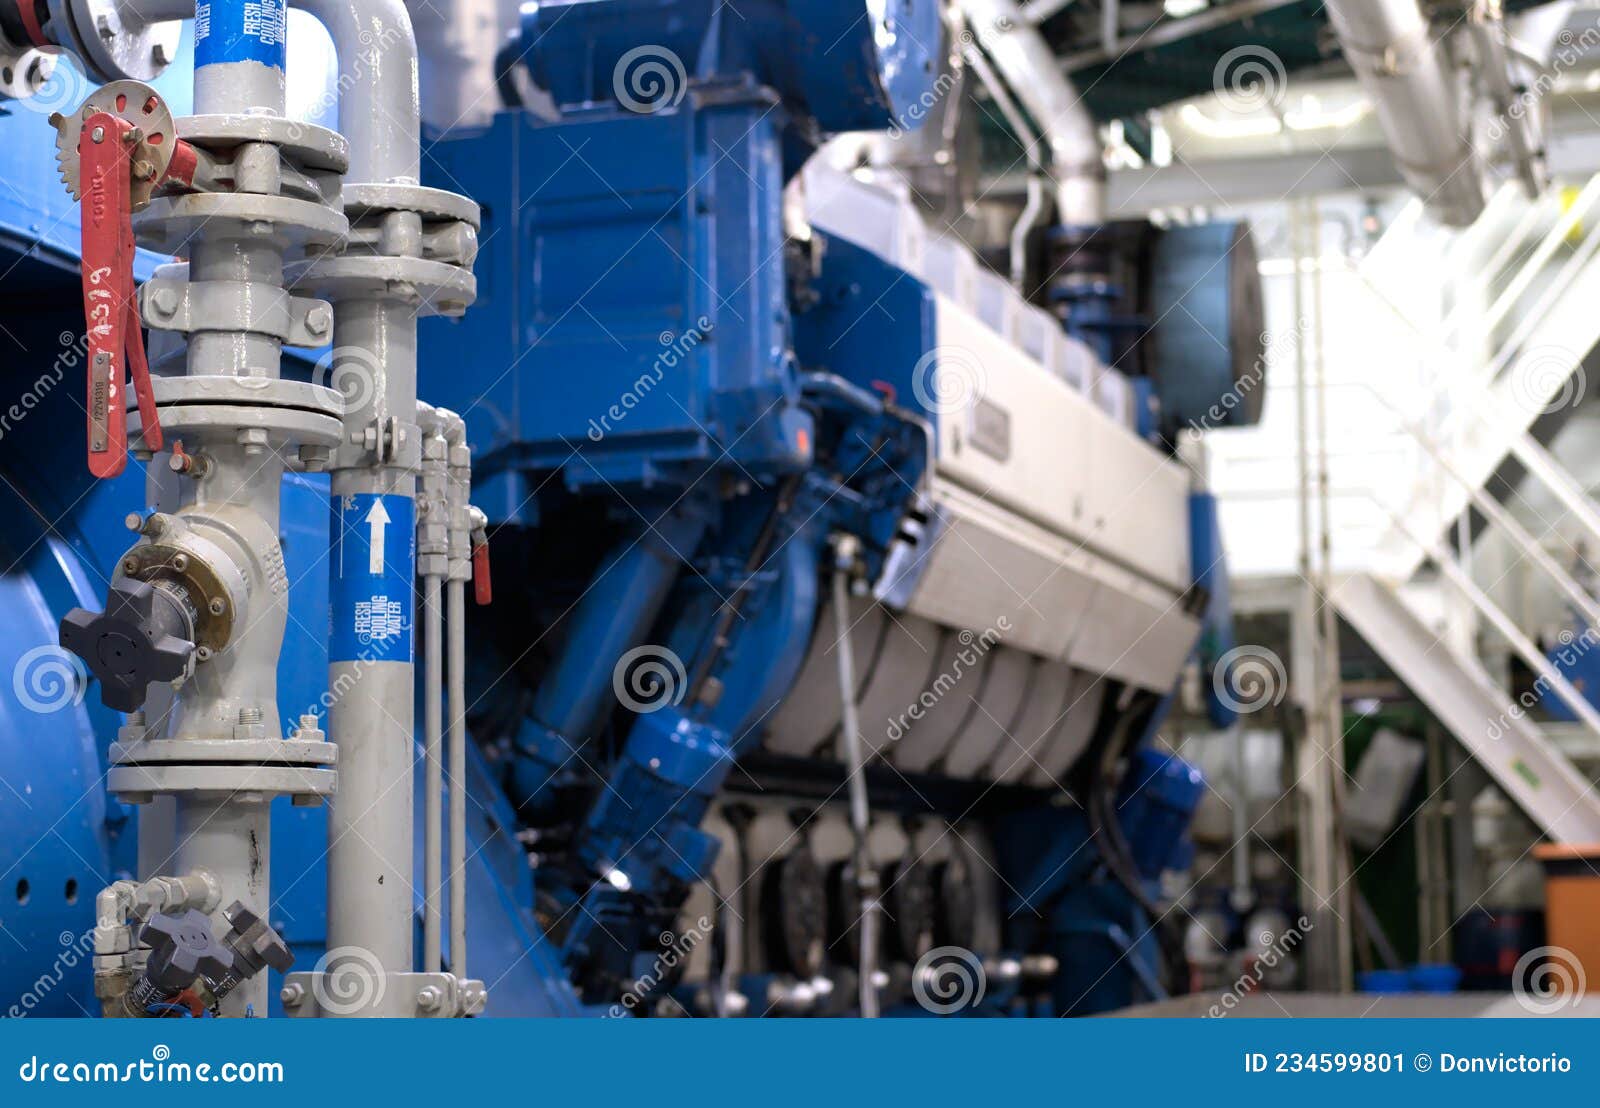 mytologi hektar Legitim Main Engine in Machinery Room on Board Modern Ship Stock Image - Image of  equipment, panel: 234599801